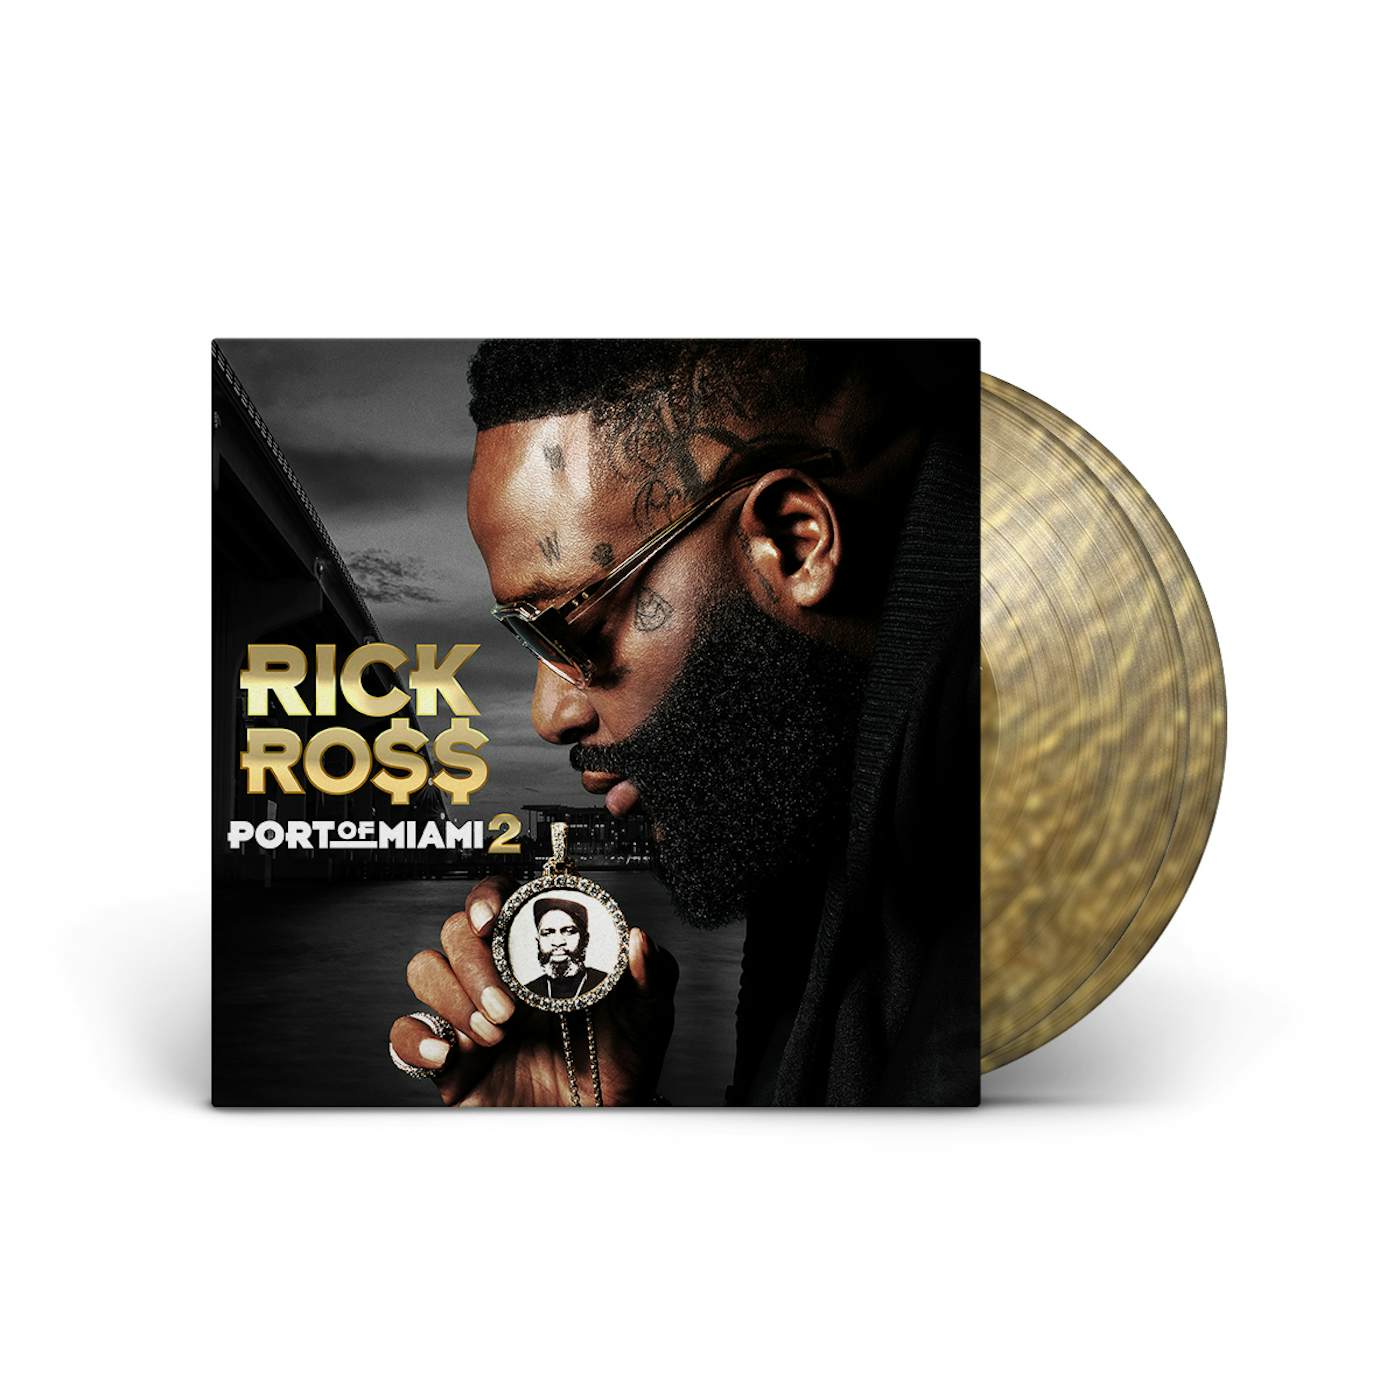 Rick Ross "Port of Miami 2" AUTOGRAPHED Translucent Gold Swirl Vinyl 2-LP